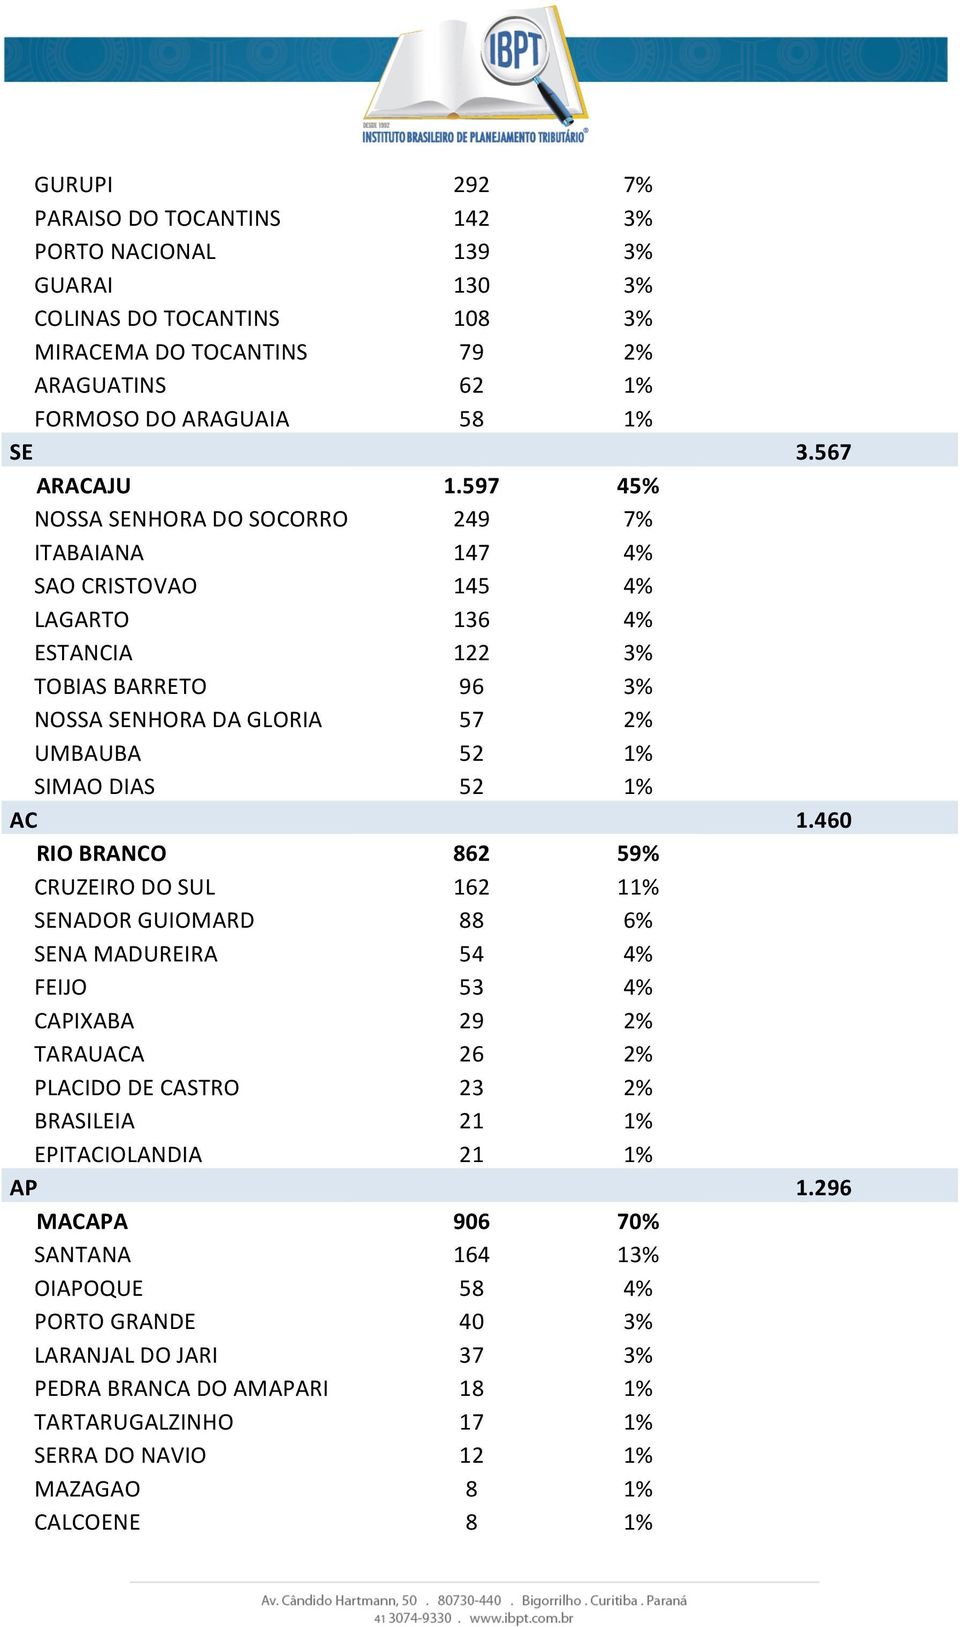 RIO BRANCO 862 59% CRUZEIRO DO SUL 162 11% SENADOR GUIOMARD 88 6% SENA MADUREIRA 54 4% FEIJO 53 4% CAPIXABA 29 2% TARAUACA 26 2% PLACIDO DE CASTRO 23 2% BRASILEIA 21 1% EPITACIOLANDIA 21 1% AP